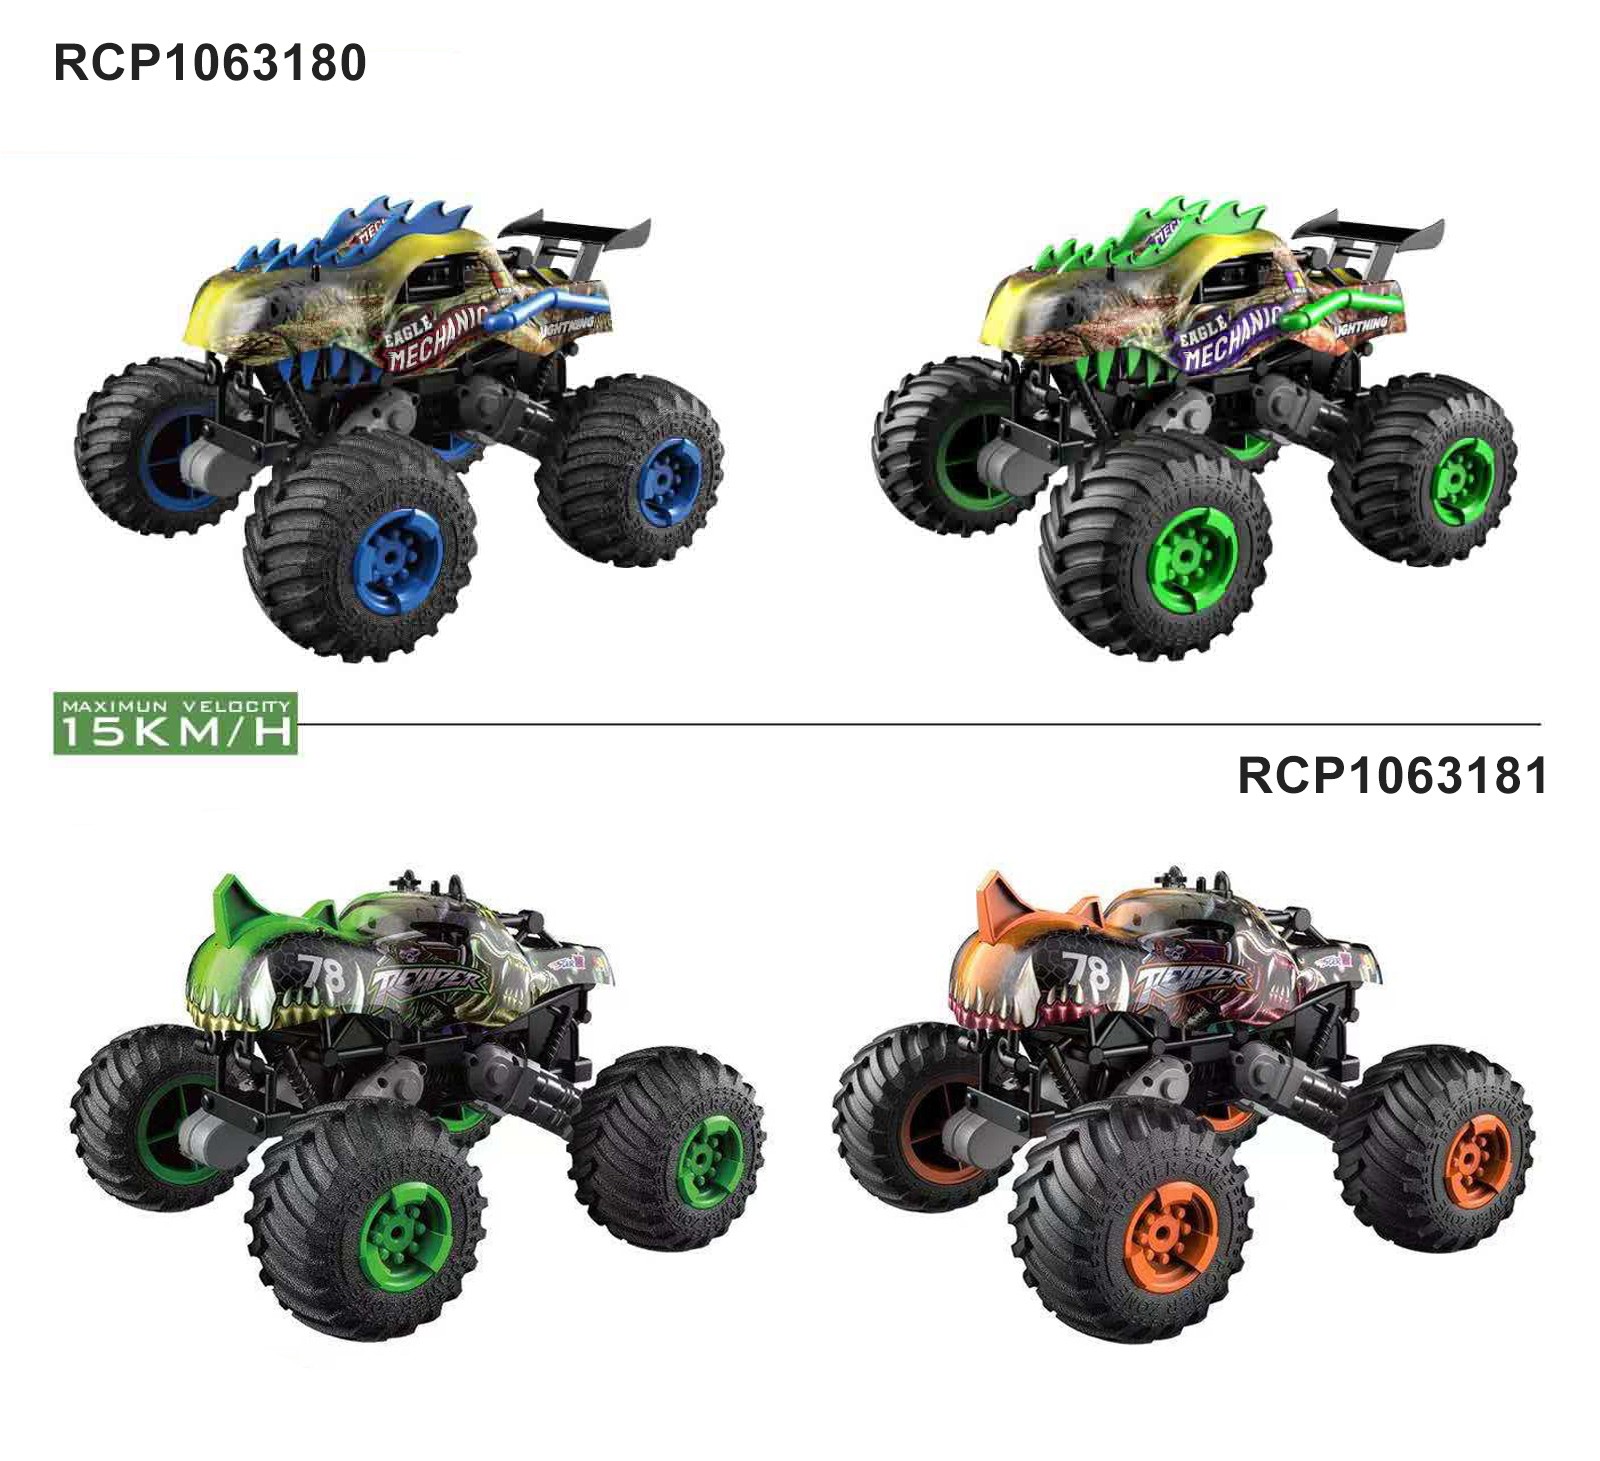 PAK TAT monster truck rc toys manufacturers-2